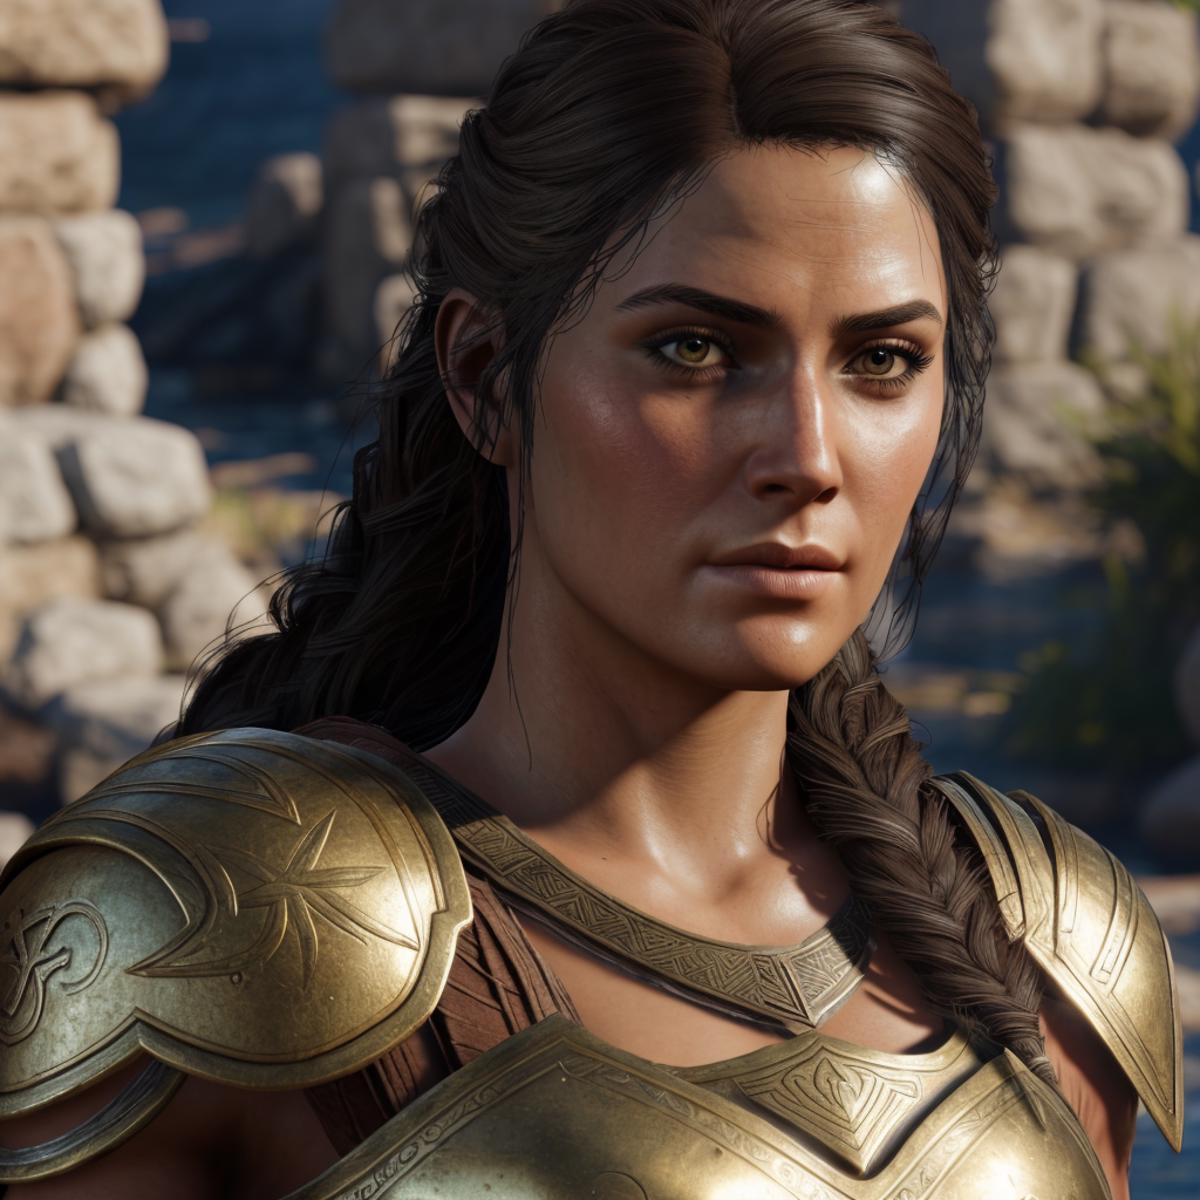 Kassandra from Assassin's Creed Odyssey image by sinatra